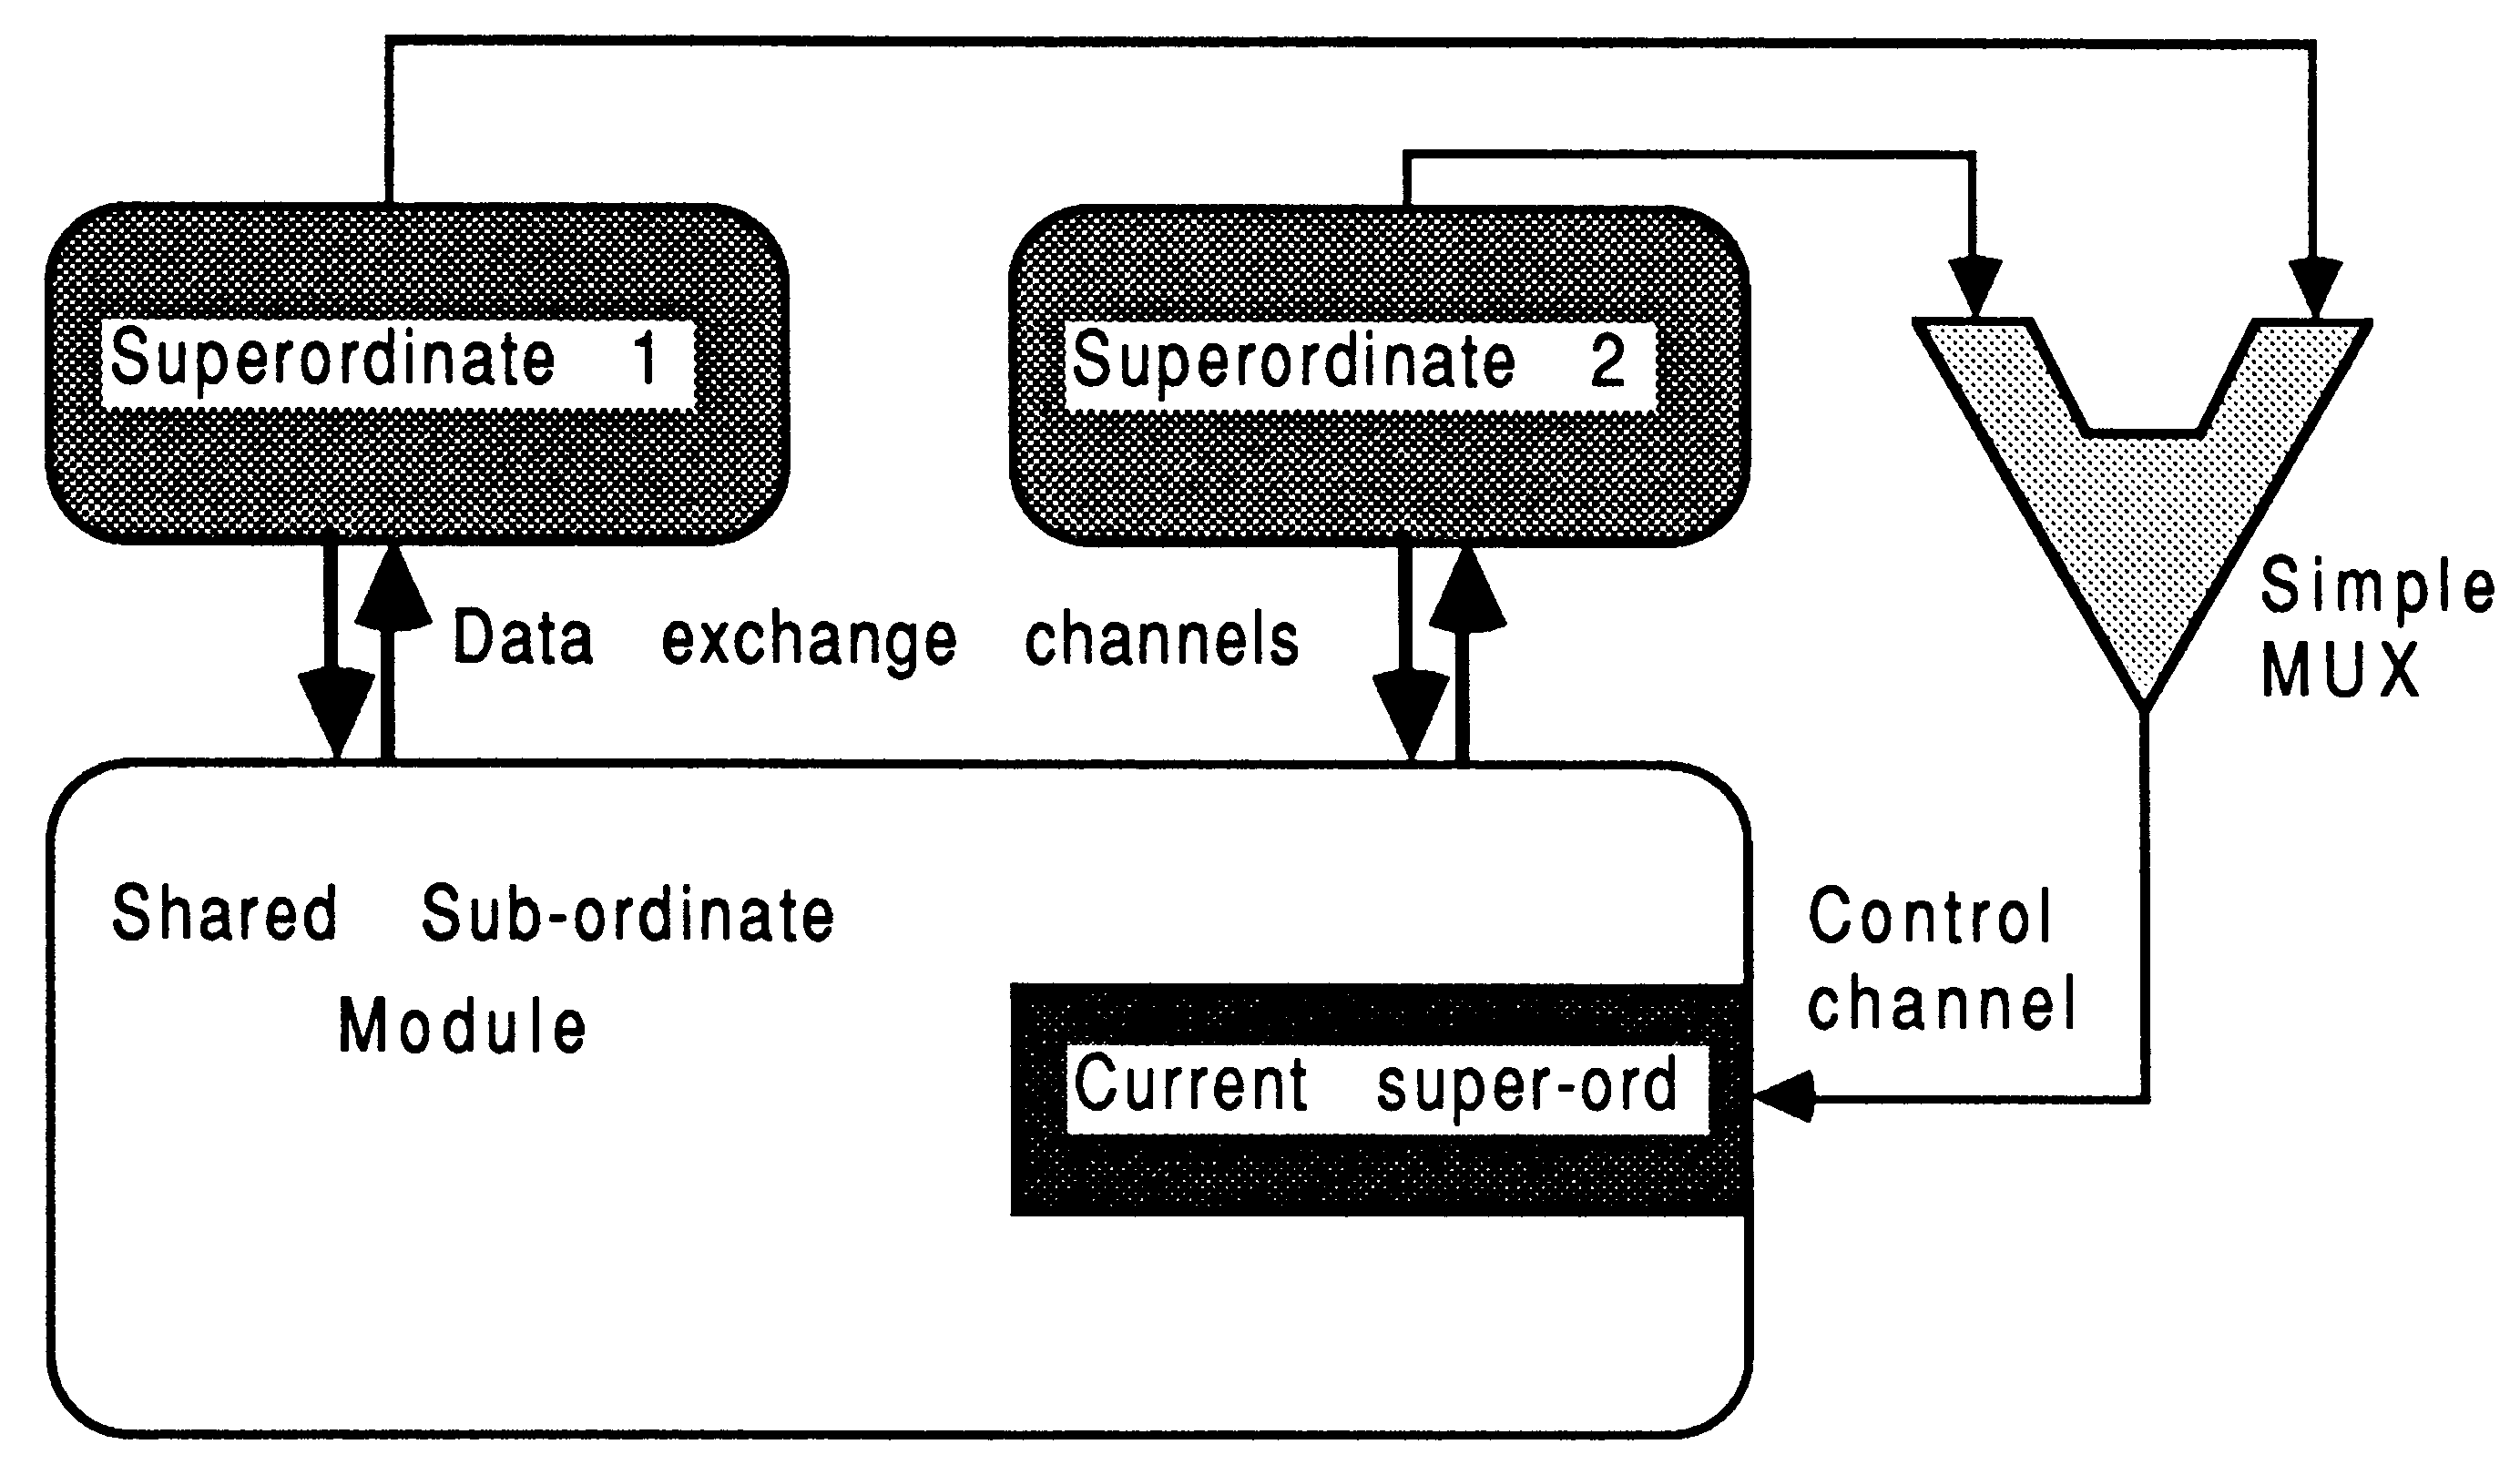 Sharing a common
     sub-ordinate module